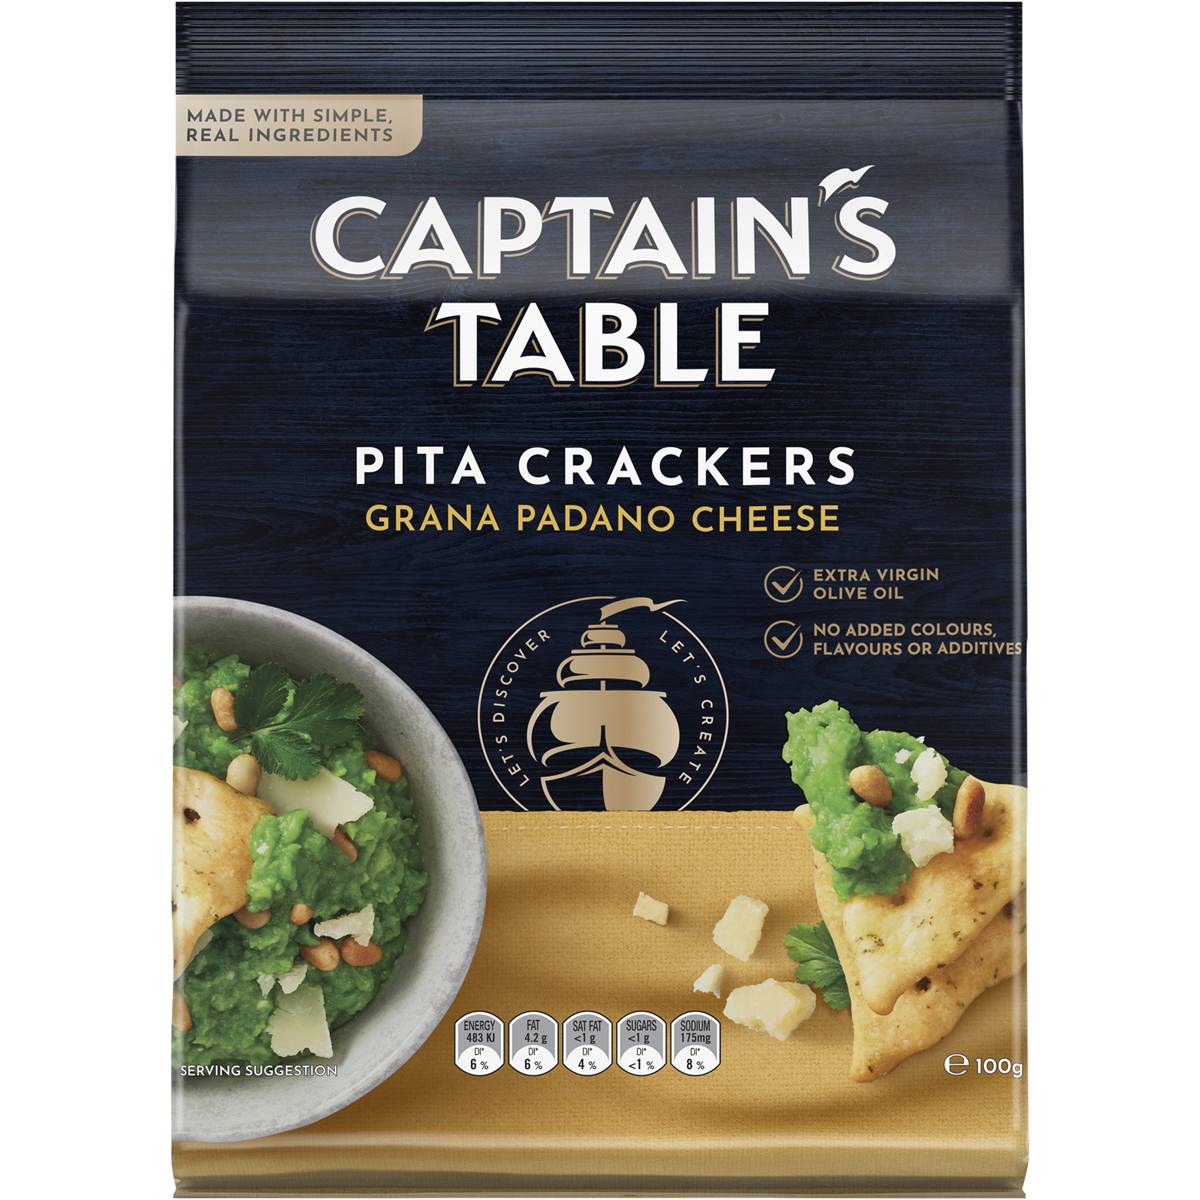 Captains Table Pita Crackers Grana Padano Cheese